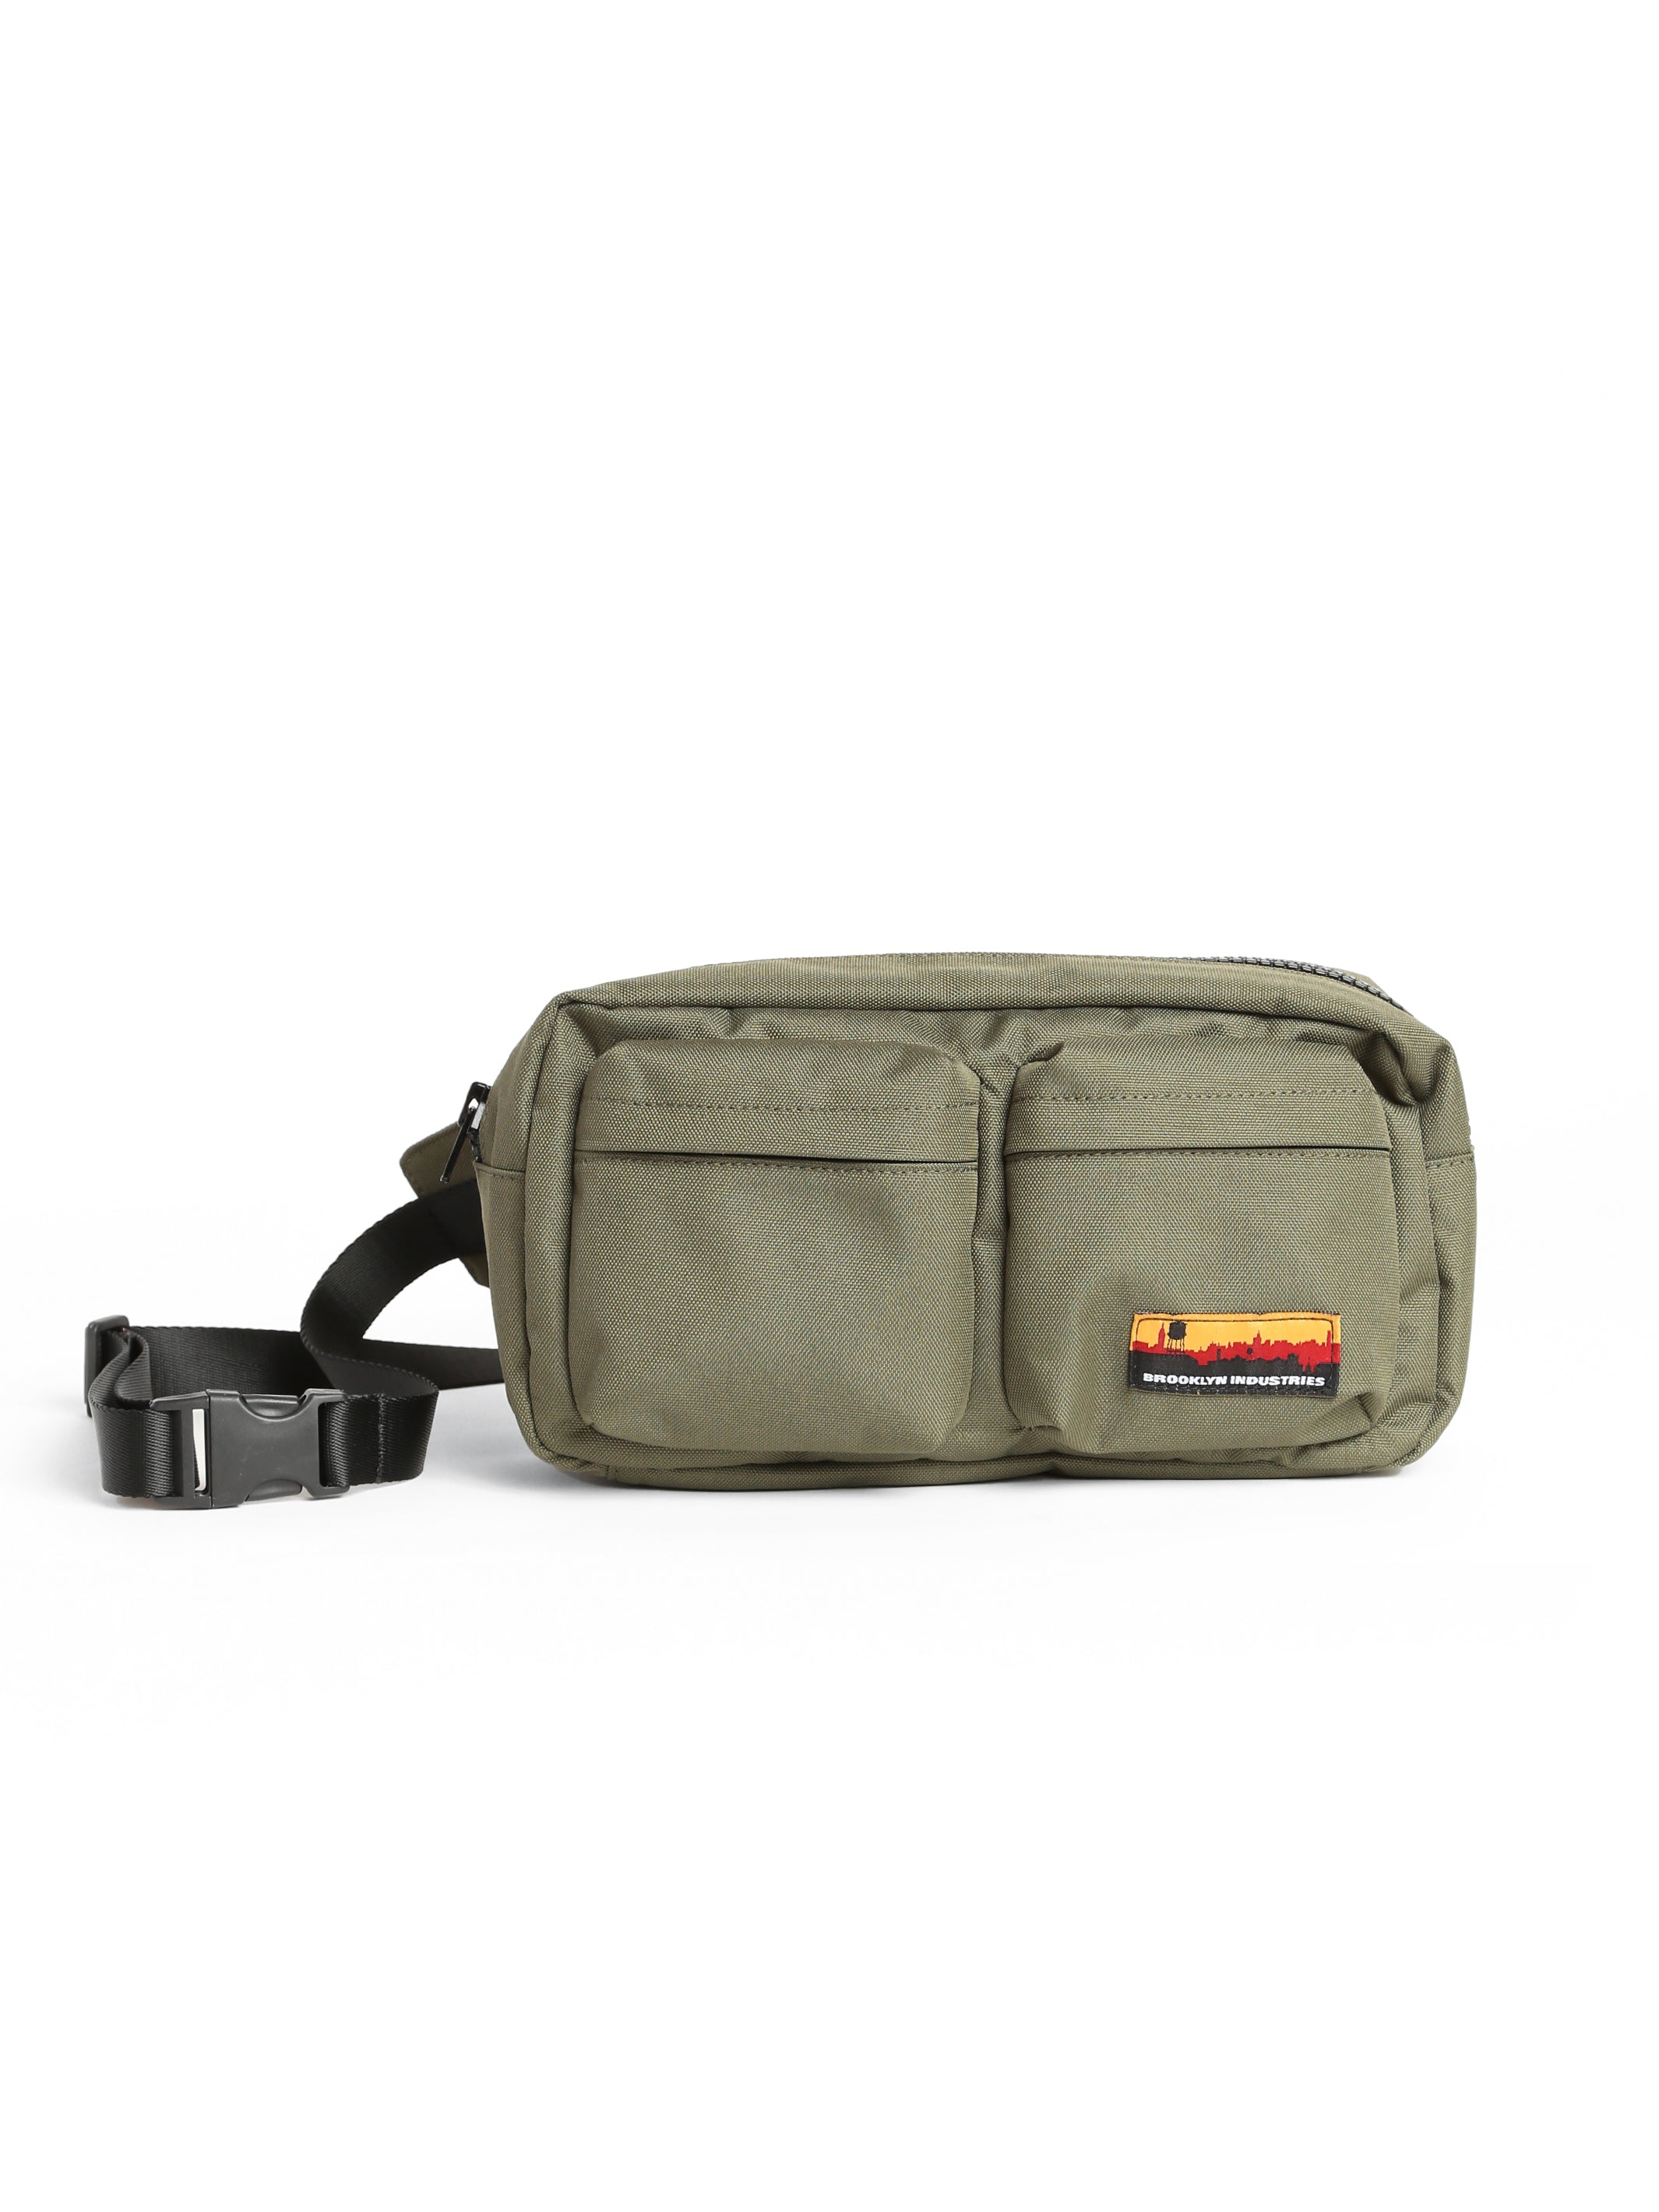 Carhartt Military Hip Bag Carhartt WIP